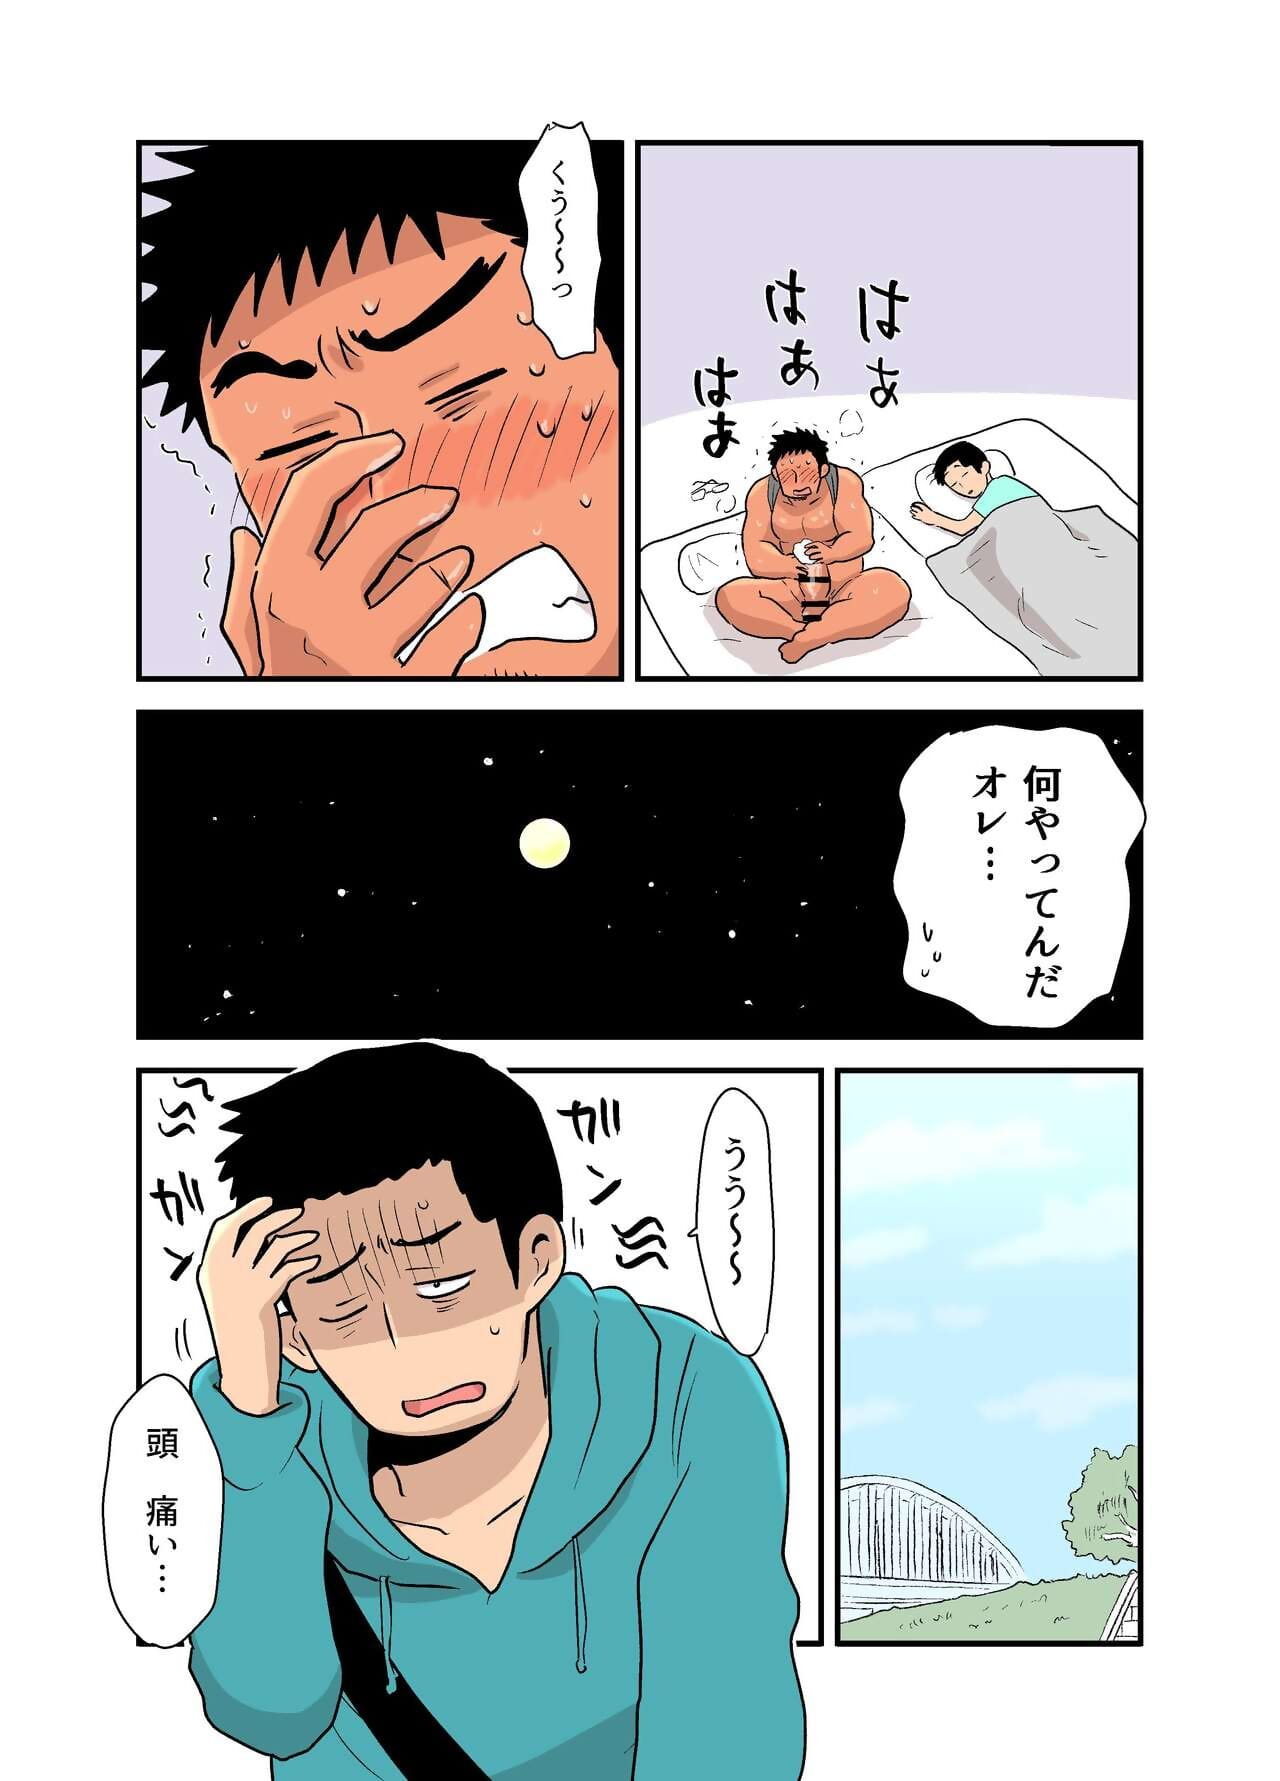 yotta hyoushi ดี issen โอ koe sase rarete shimatta otaku แมน ไม่ hanashi ส่วนหนึ่ง 2 page 1